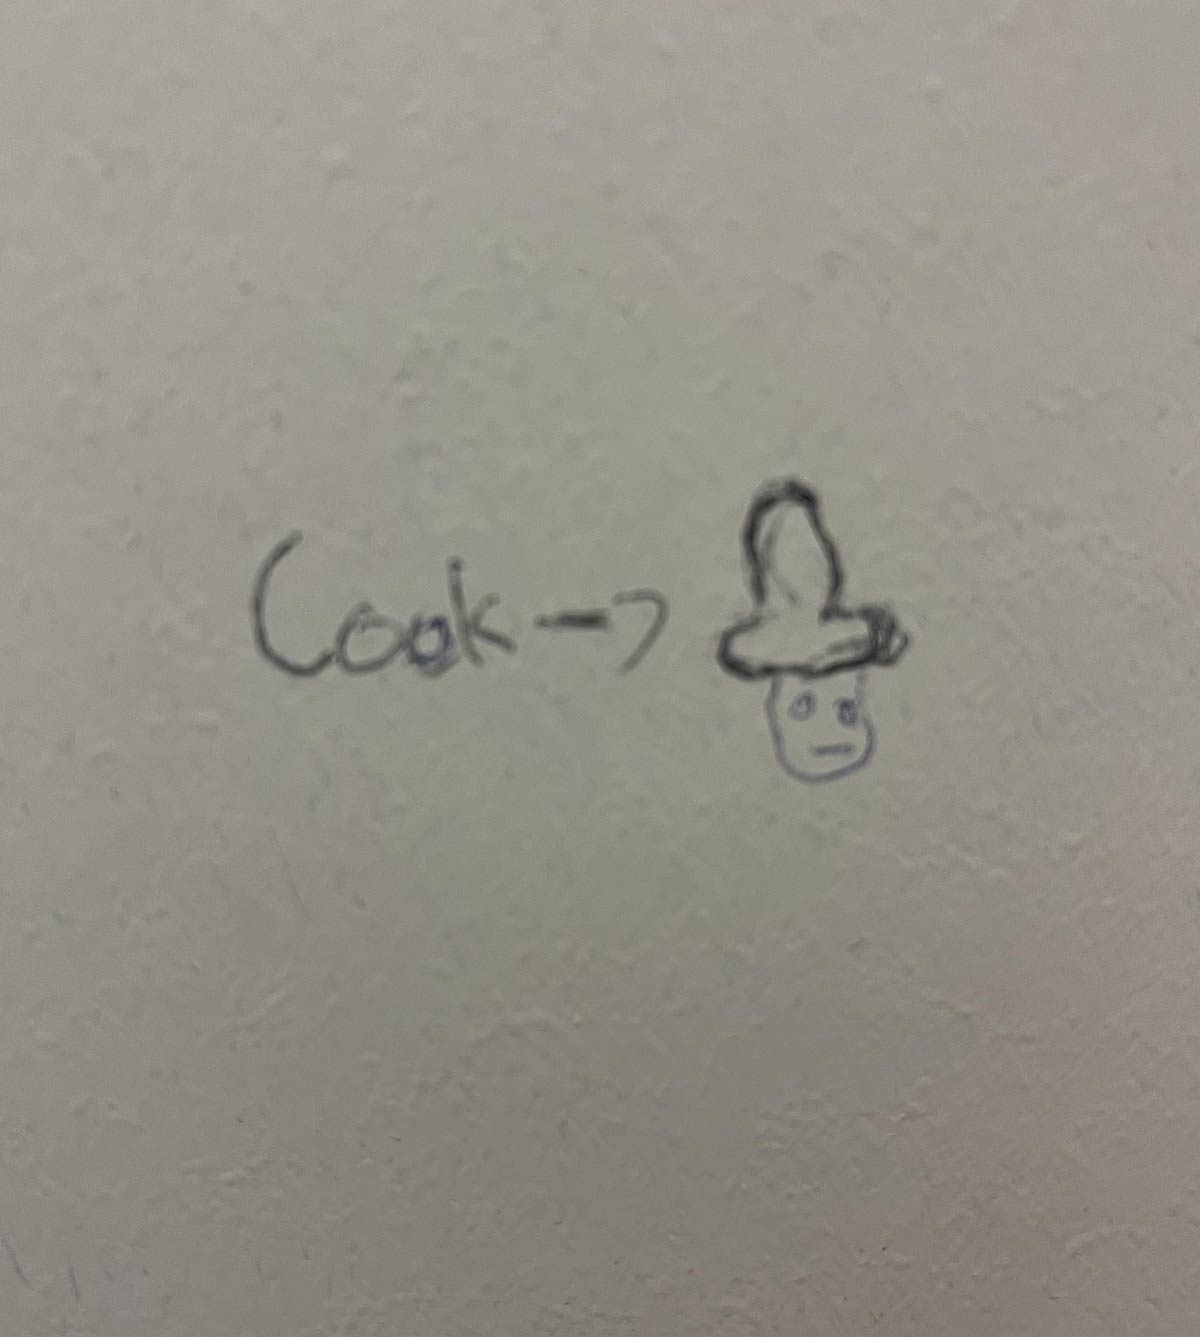 Graffiti correction in my change room